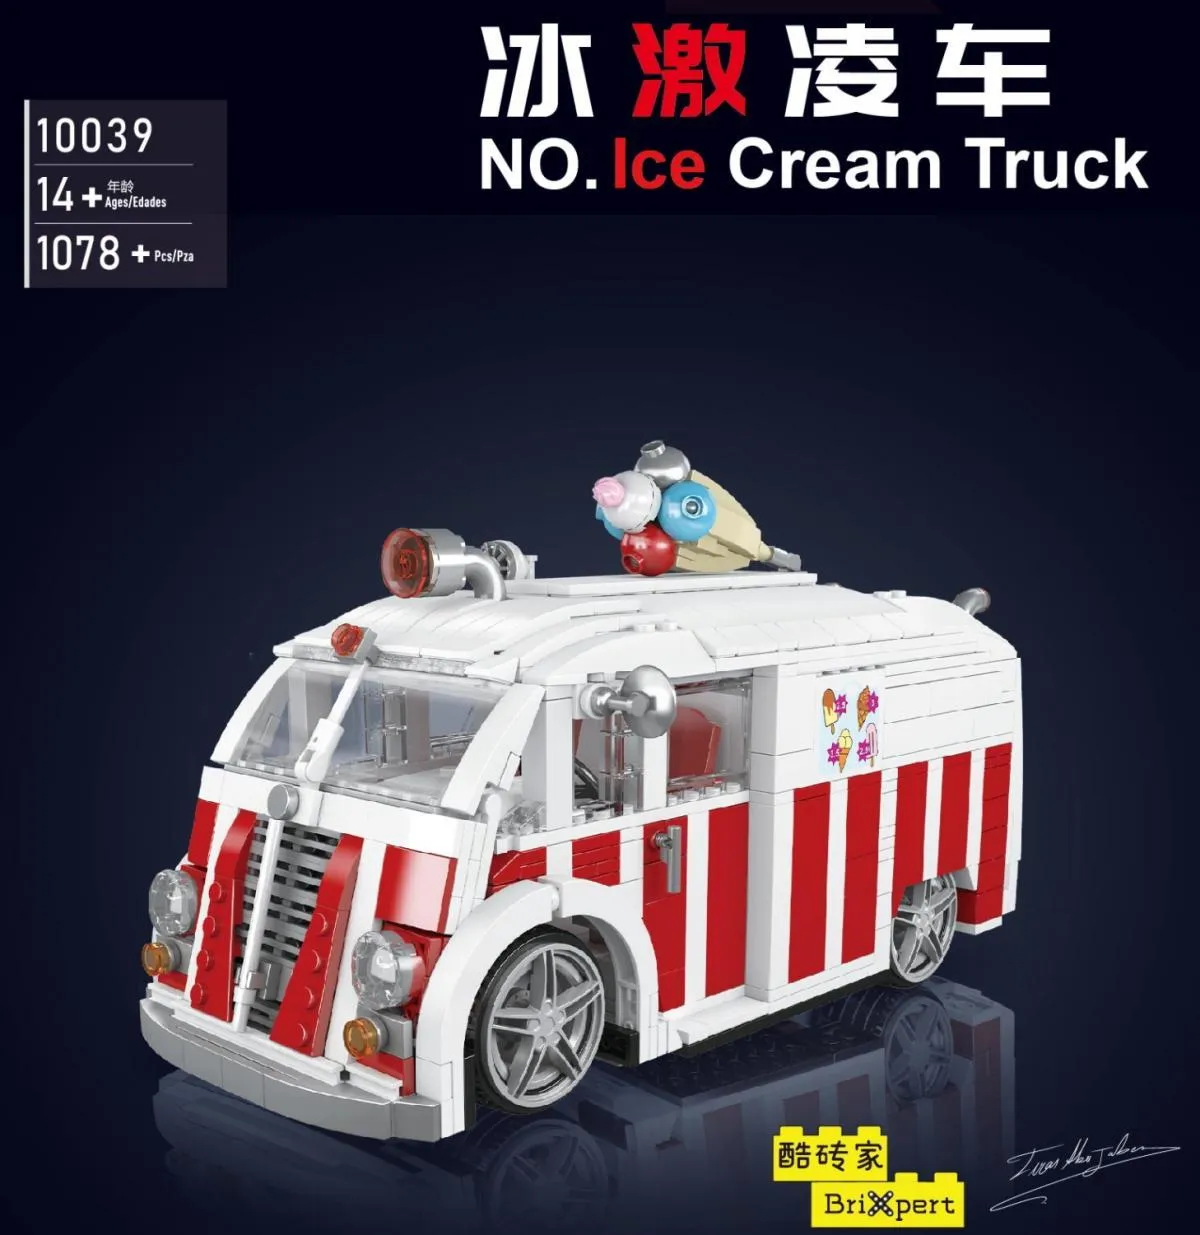 Ice Cream Truck Gallery